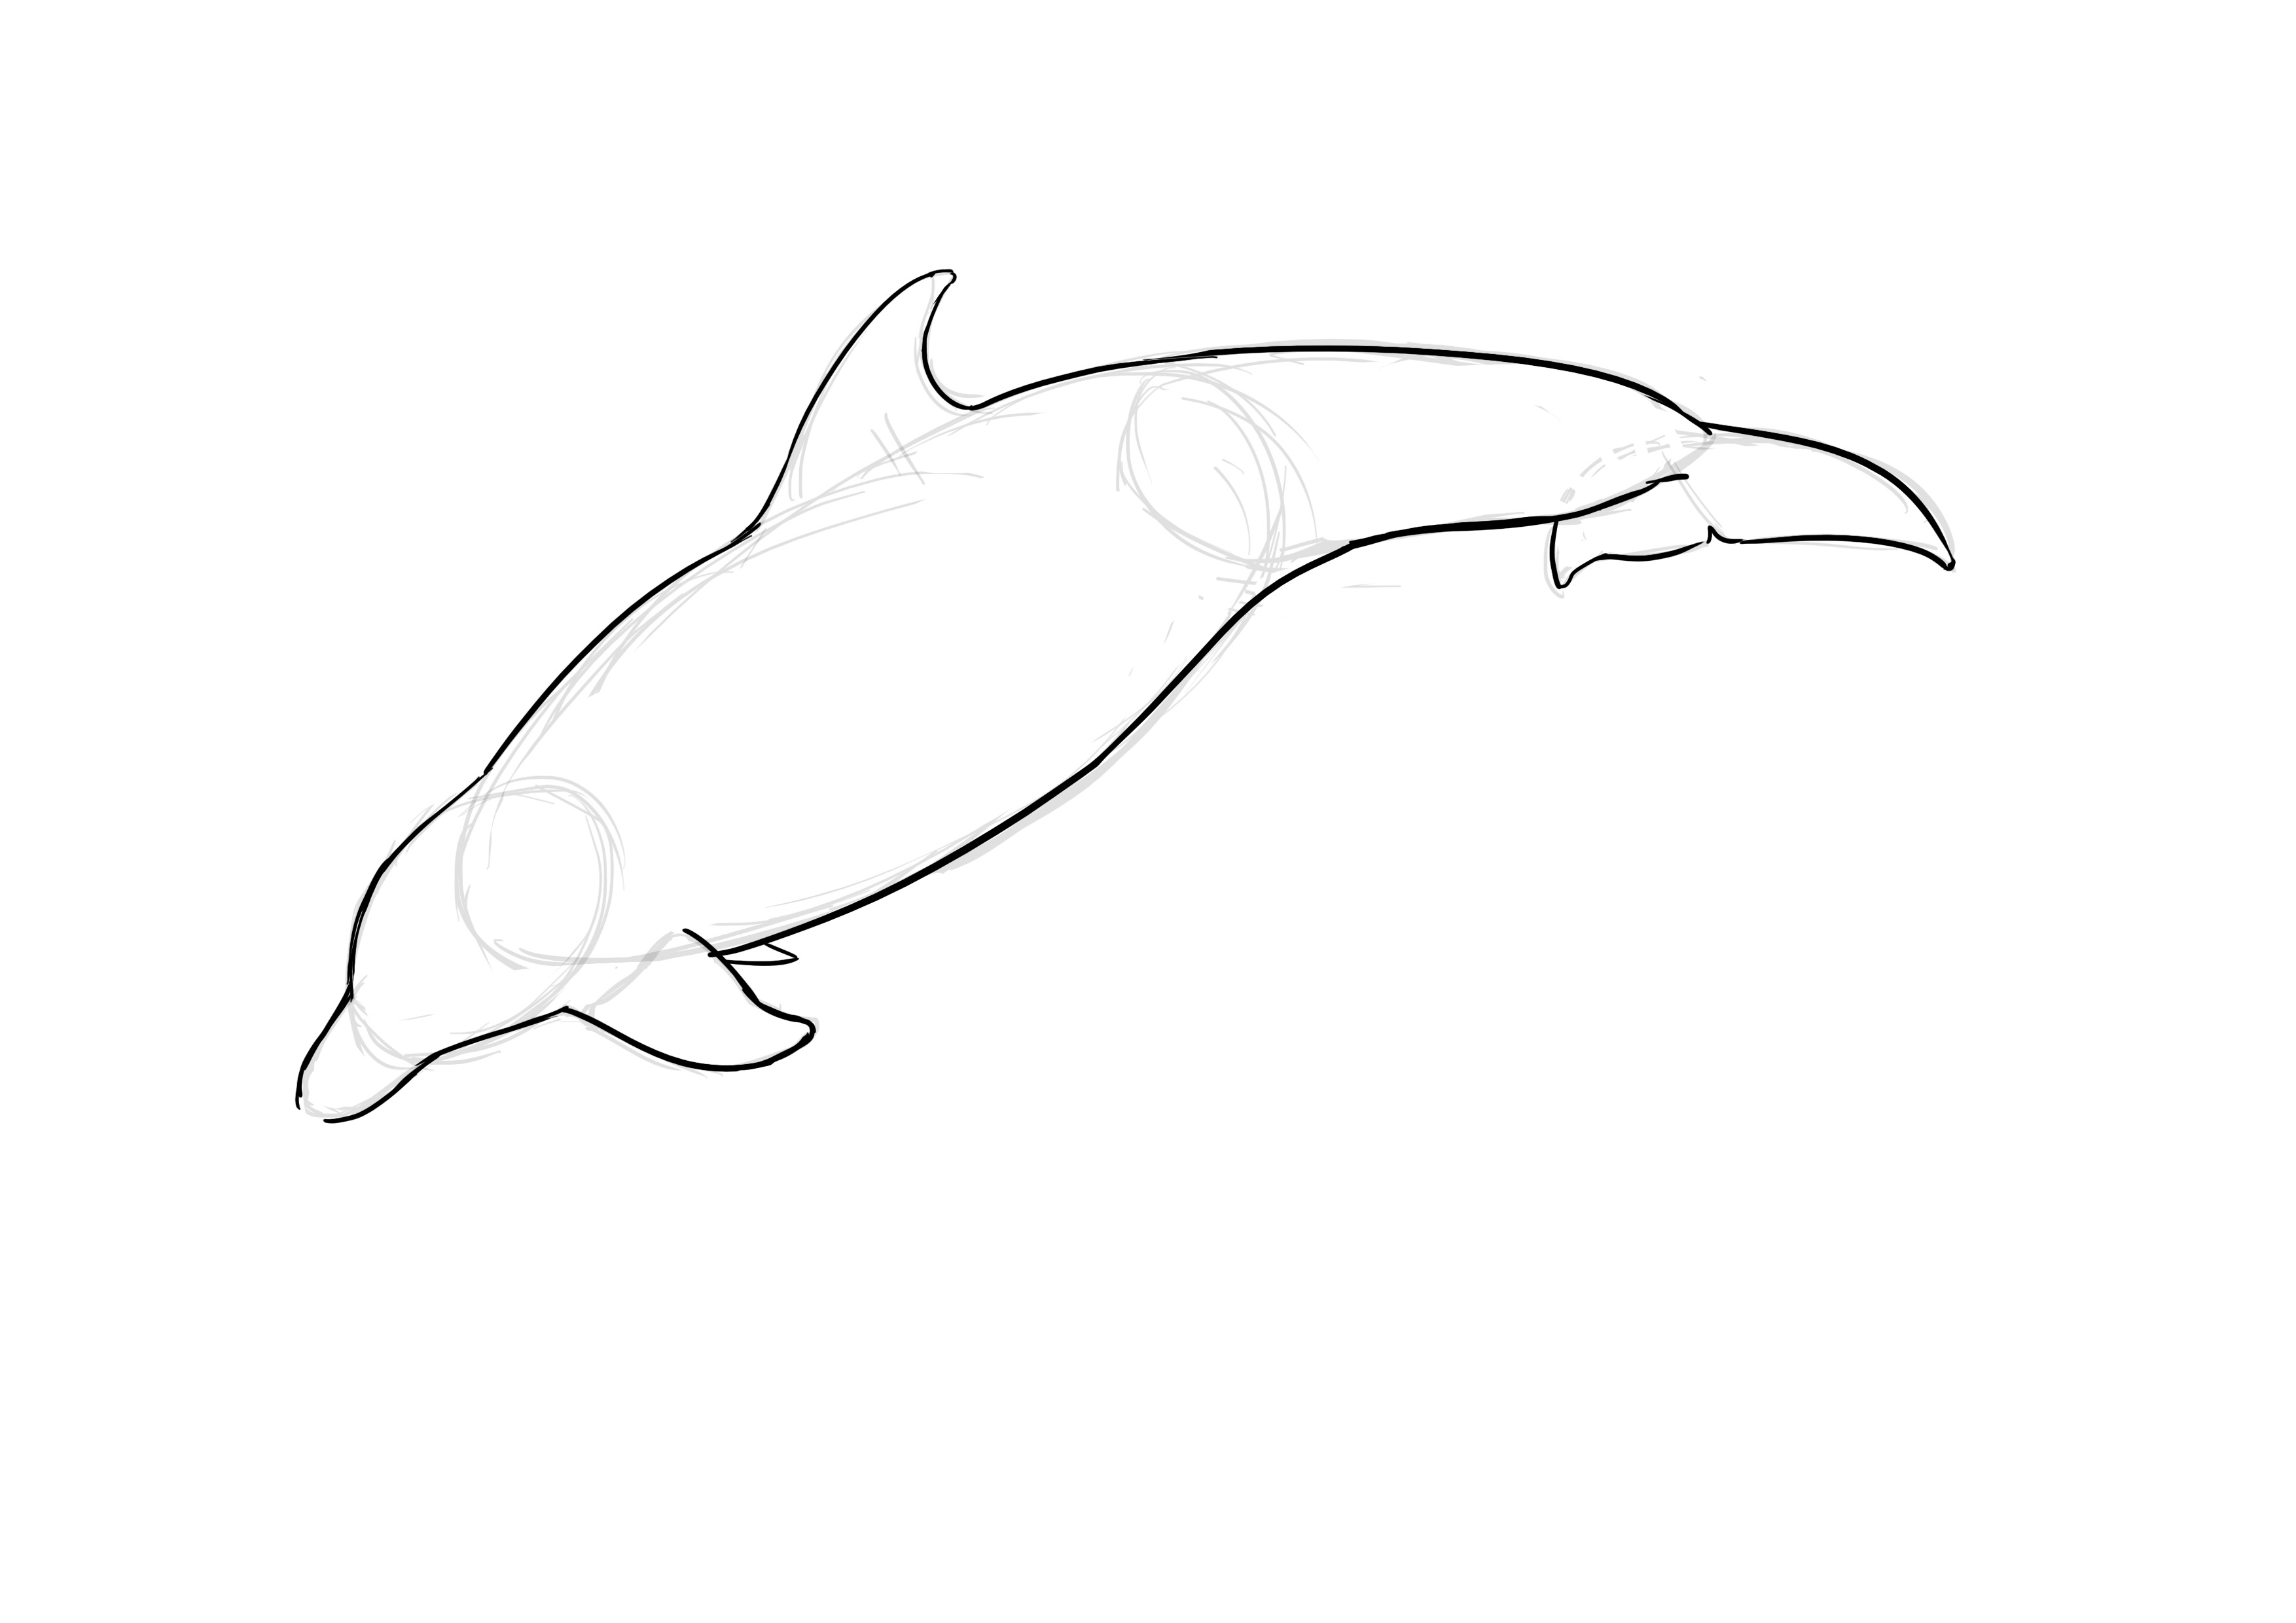 Dessiner un croquis de dauphin